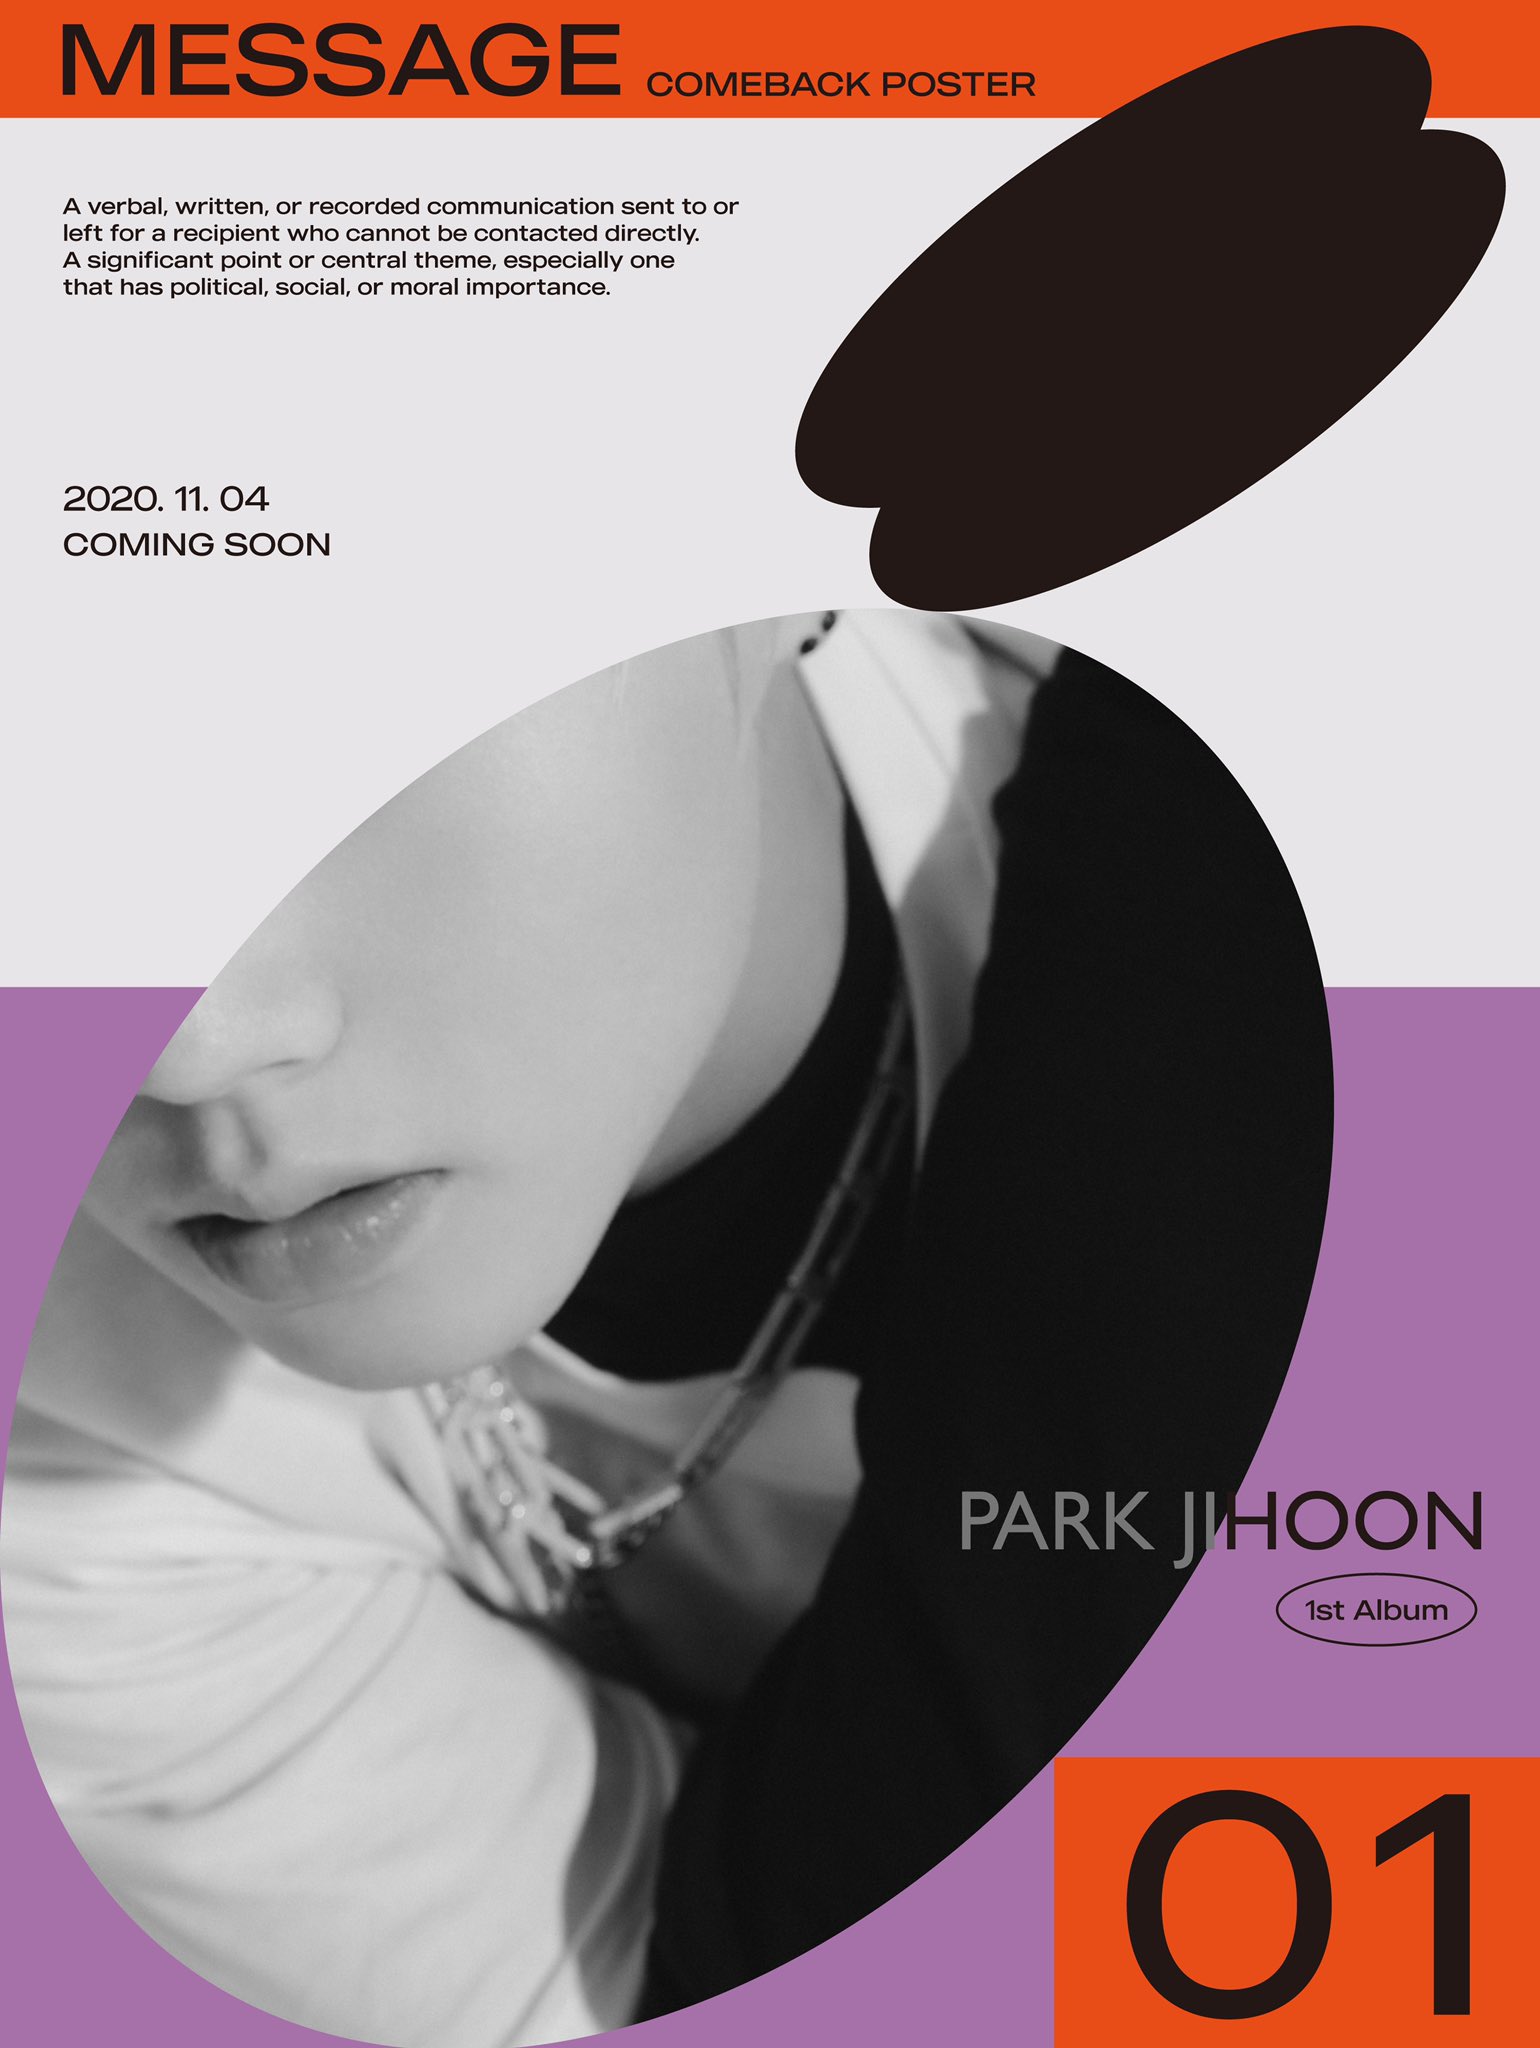 park-ji-hoon-reveals-detailed-schedule-for-1st-full-length-album-message-on-november-4-1